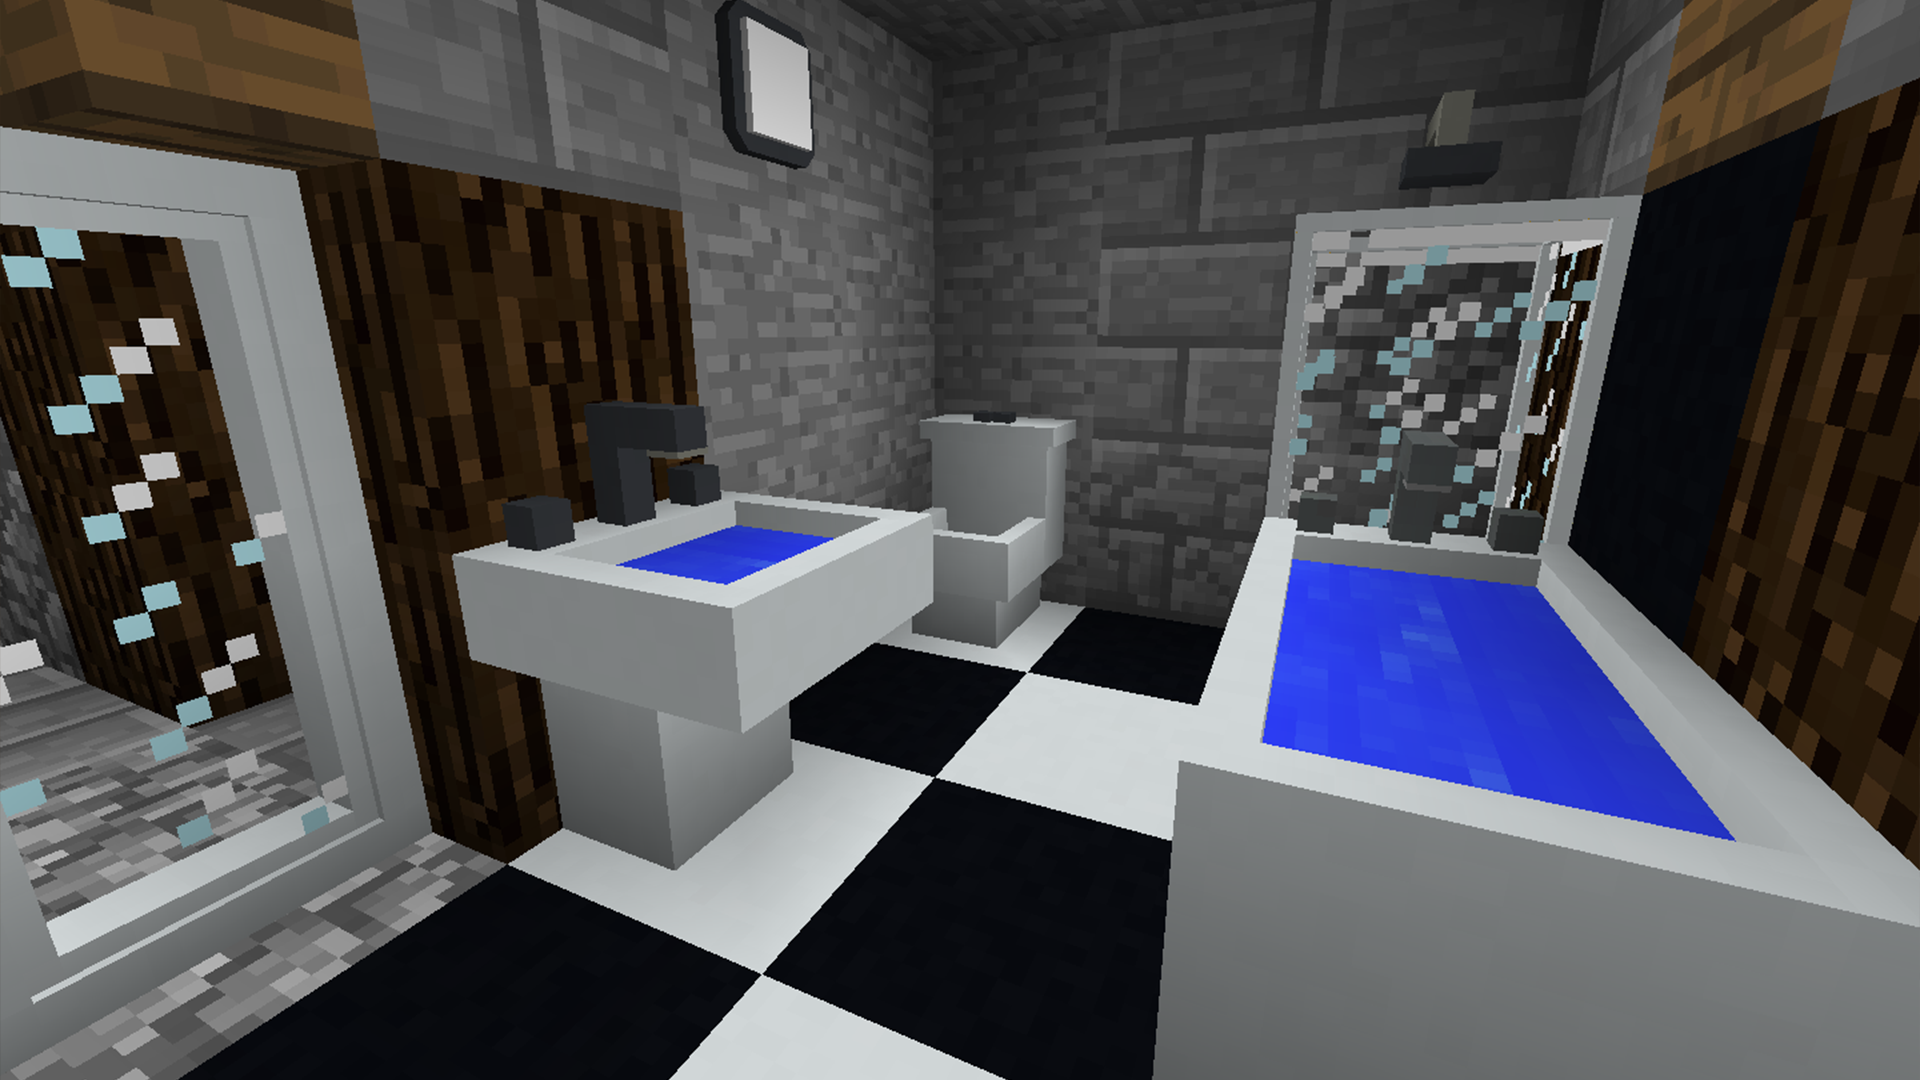 Мод на майнкрафт скибиди туалет новые. Minecraft 1.12.2 Mod мебель. Мод на мебель в майнкрафт 1.12.2. Мебель для МАЙНКРАФТА 1.16.5. Mr Crayfish Furniture Mod 1.12.2 кран.